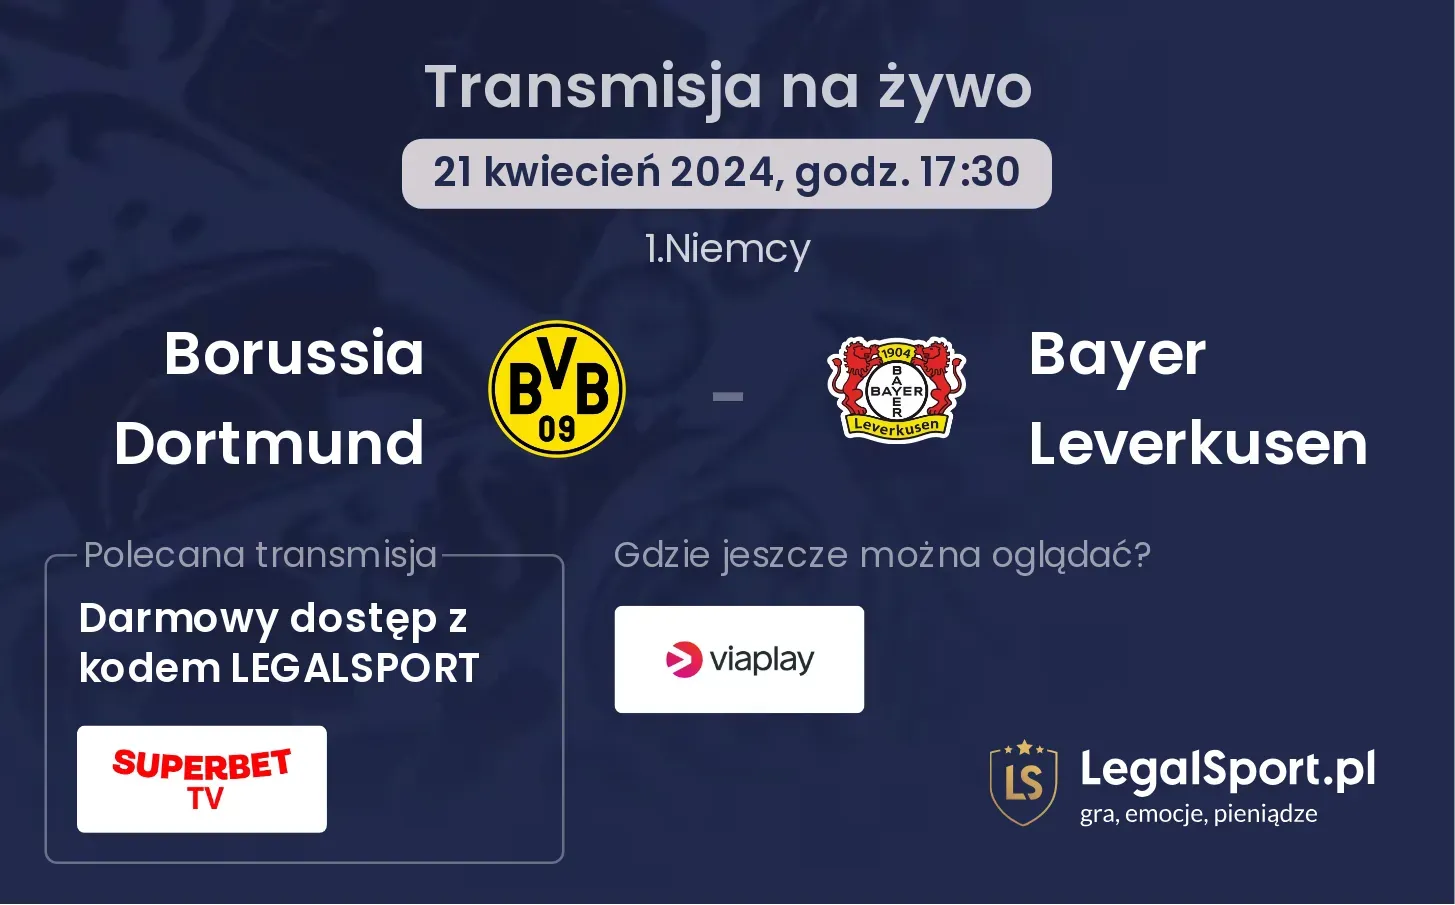 Borussia Dortmund - Bayer Leverkusen transmisja na żywo